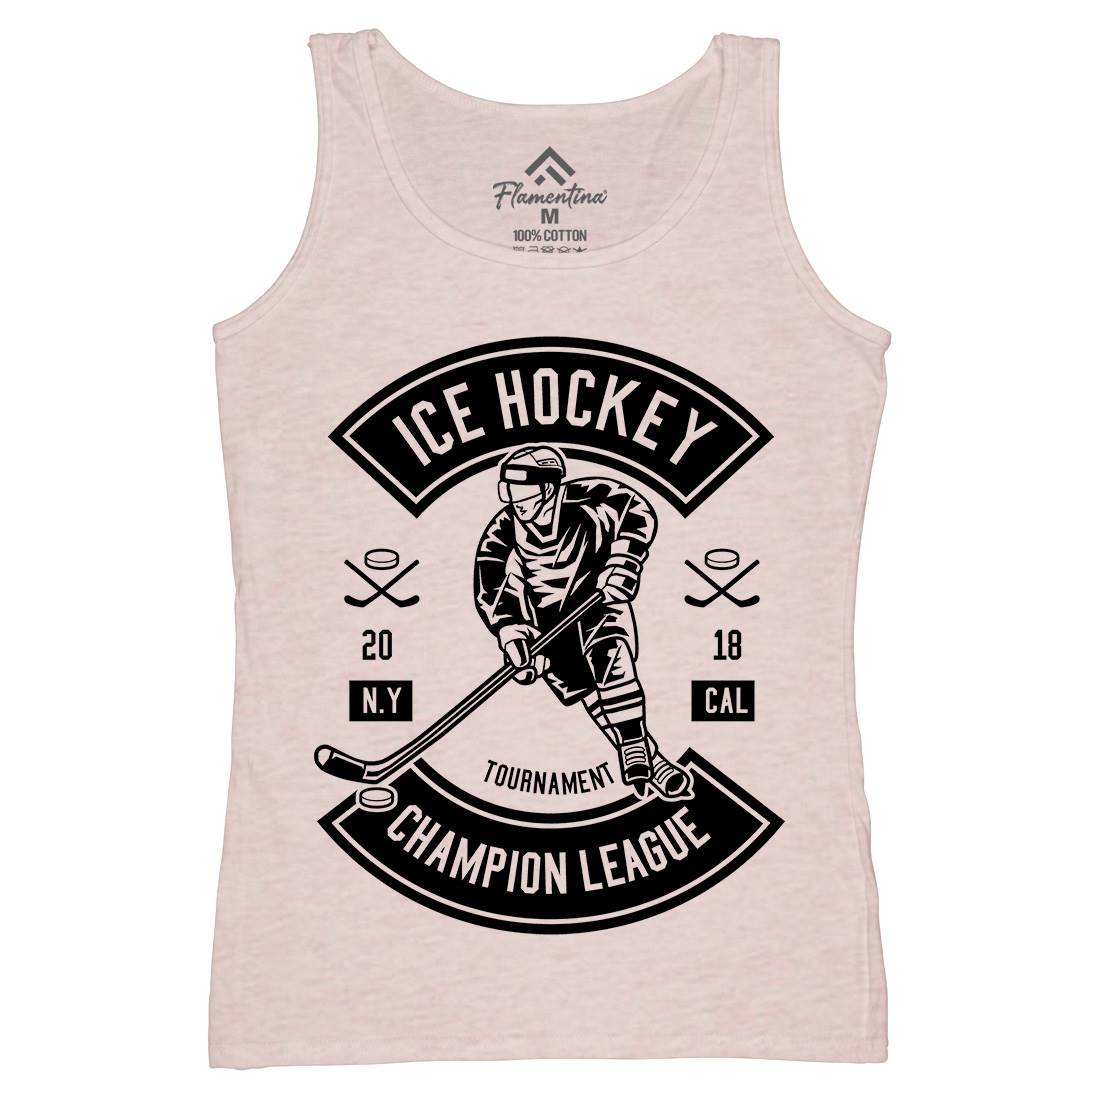 Ice Hockey Champion League Womens Organic Tank Top Vest Sport B564